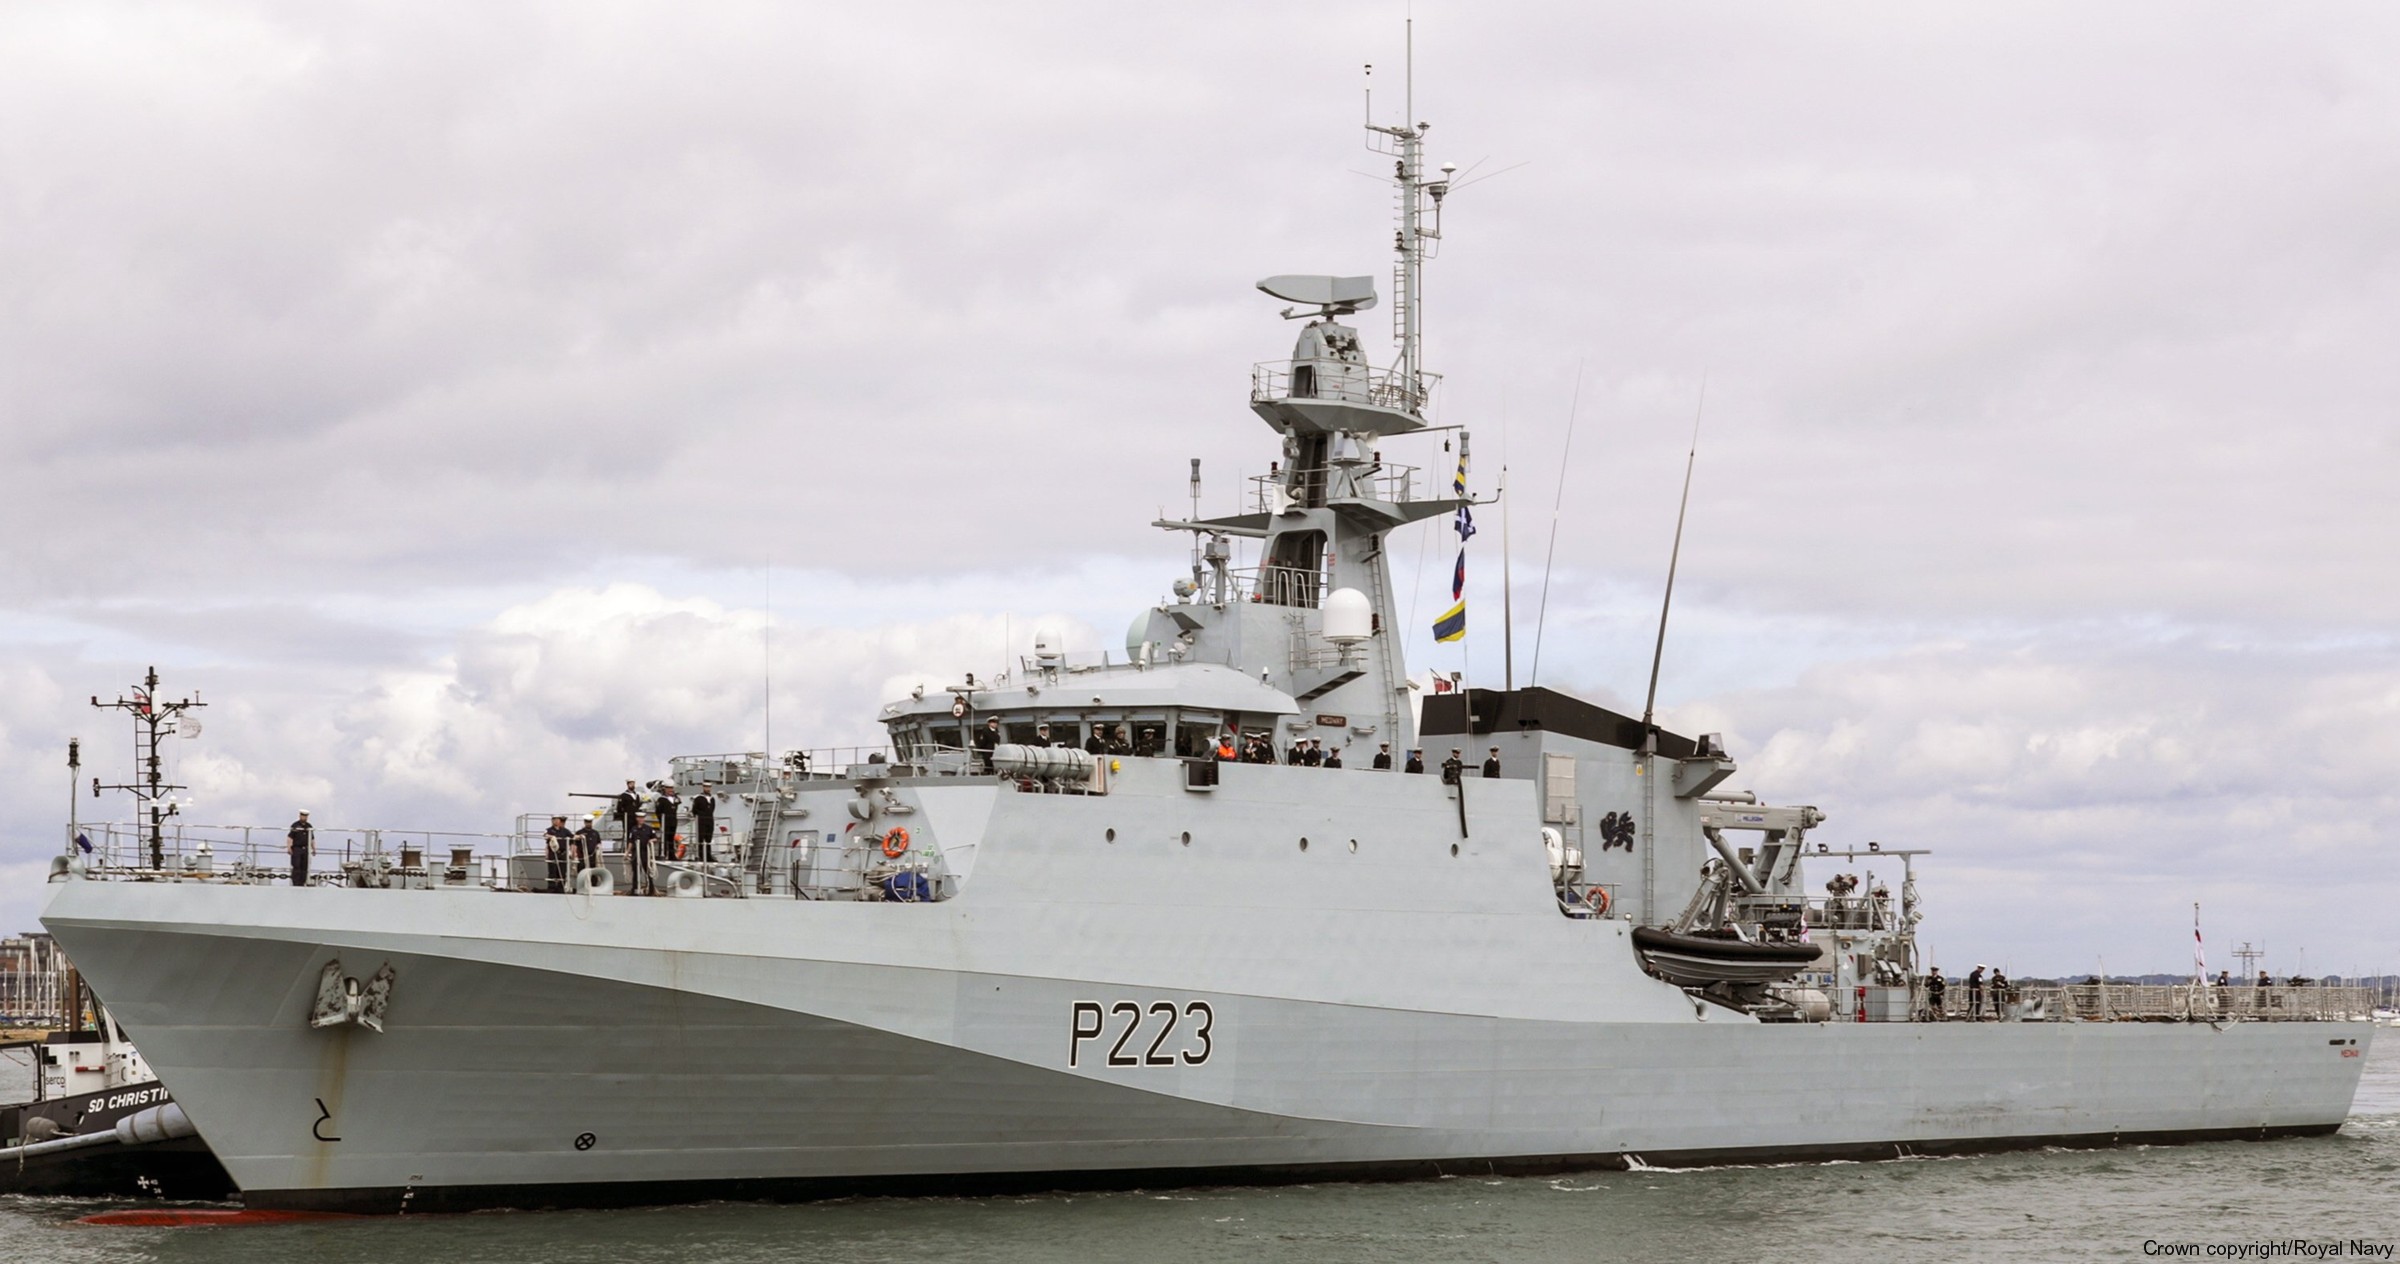 p-223 hms medway river class offshore patrol vessel opv royal navy 02